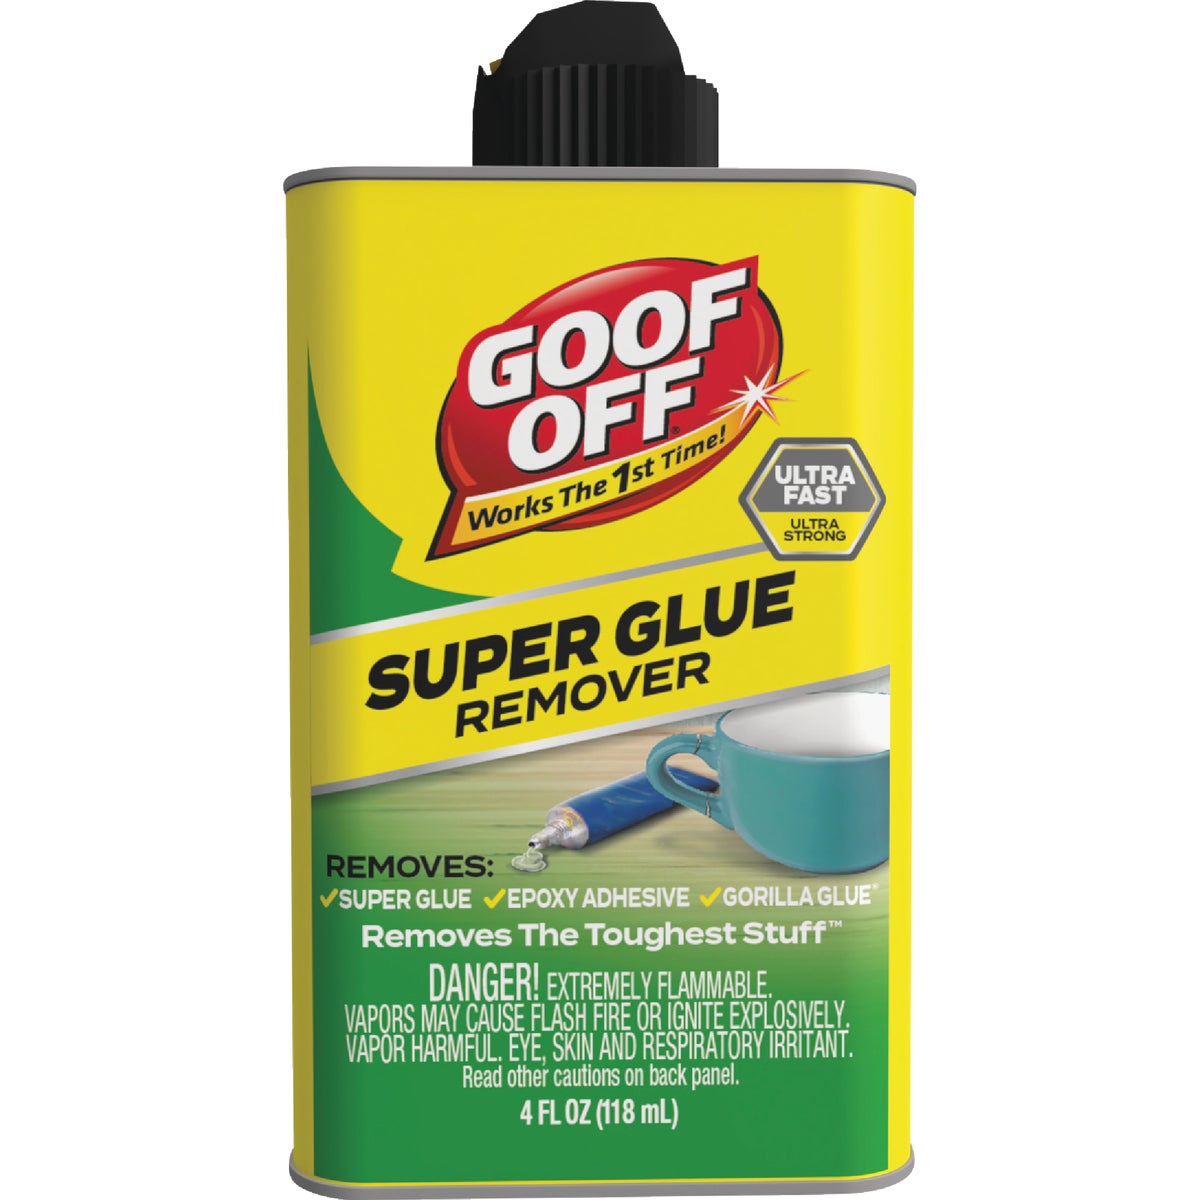 Item 300269, Goof Off super glue remover removes all three types of super glue 